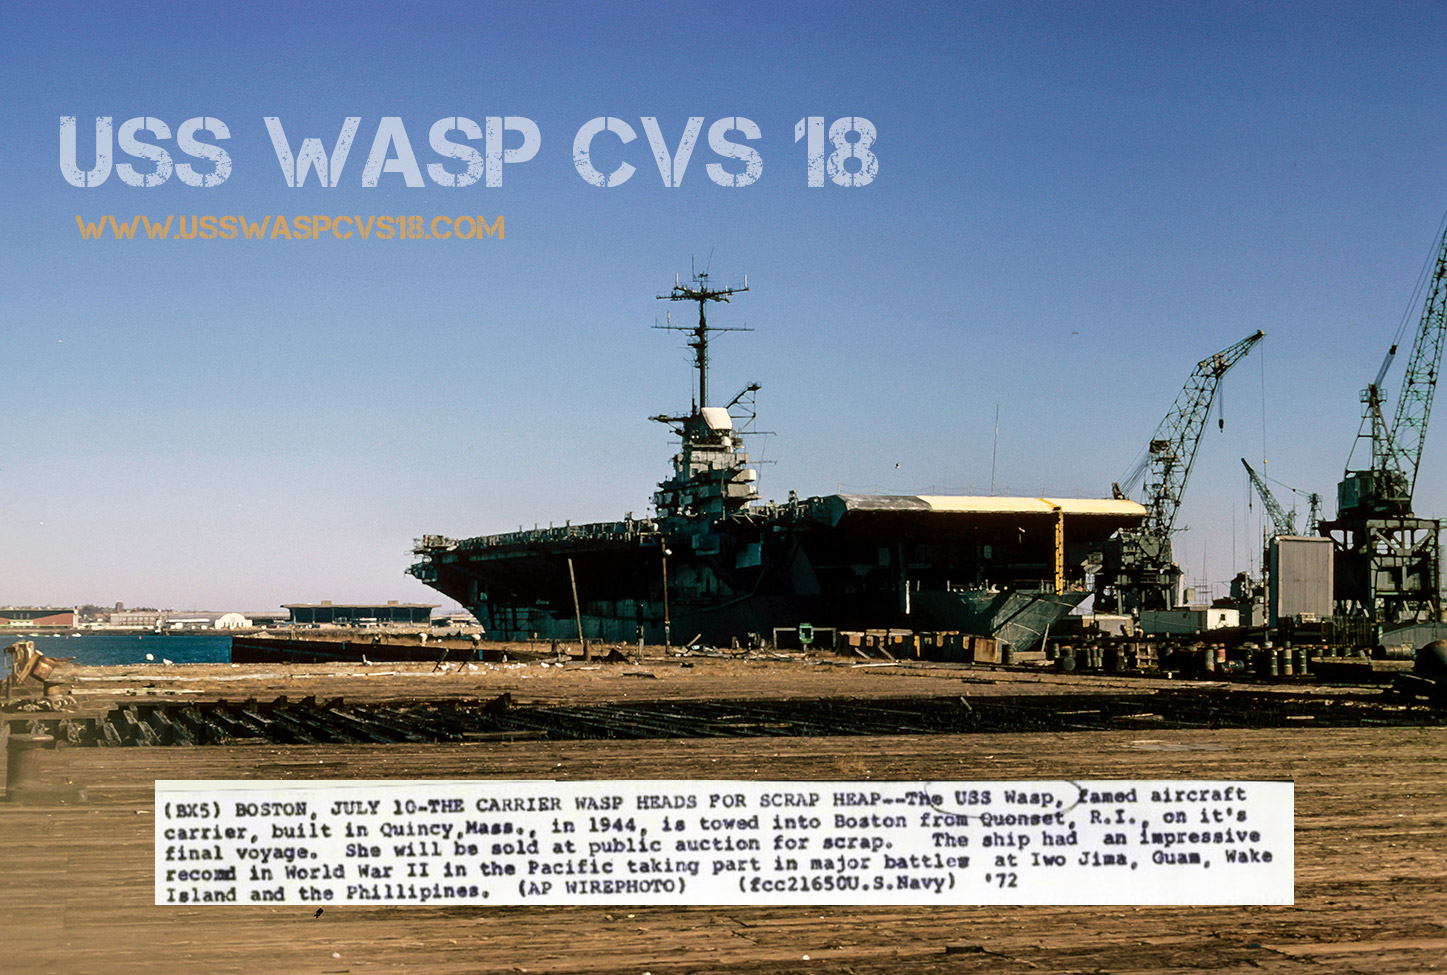 USS WASP CVS-18 prepped for scrap in Boston